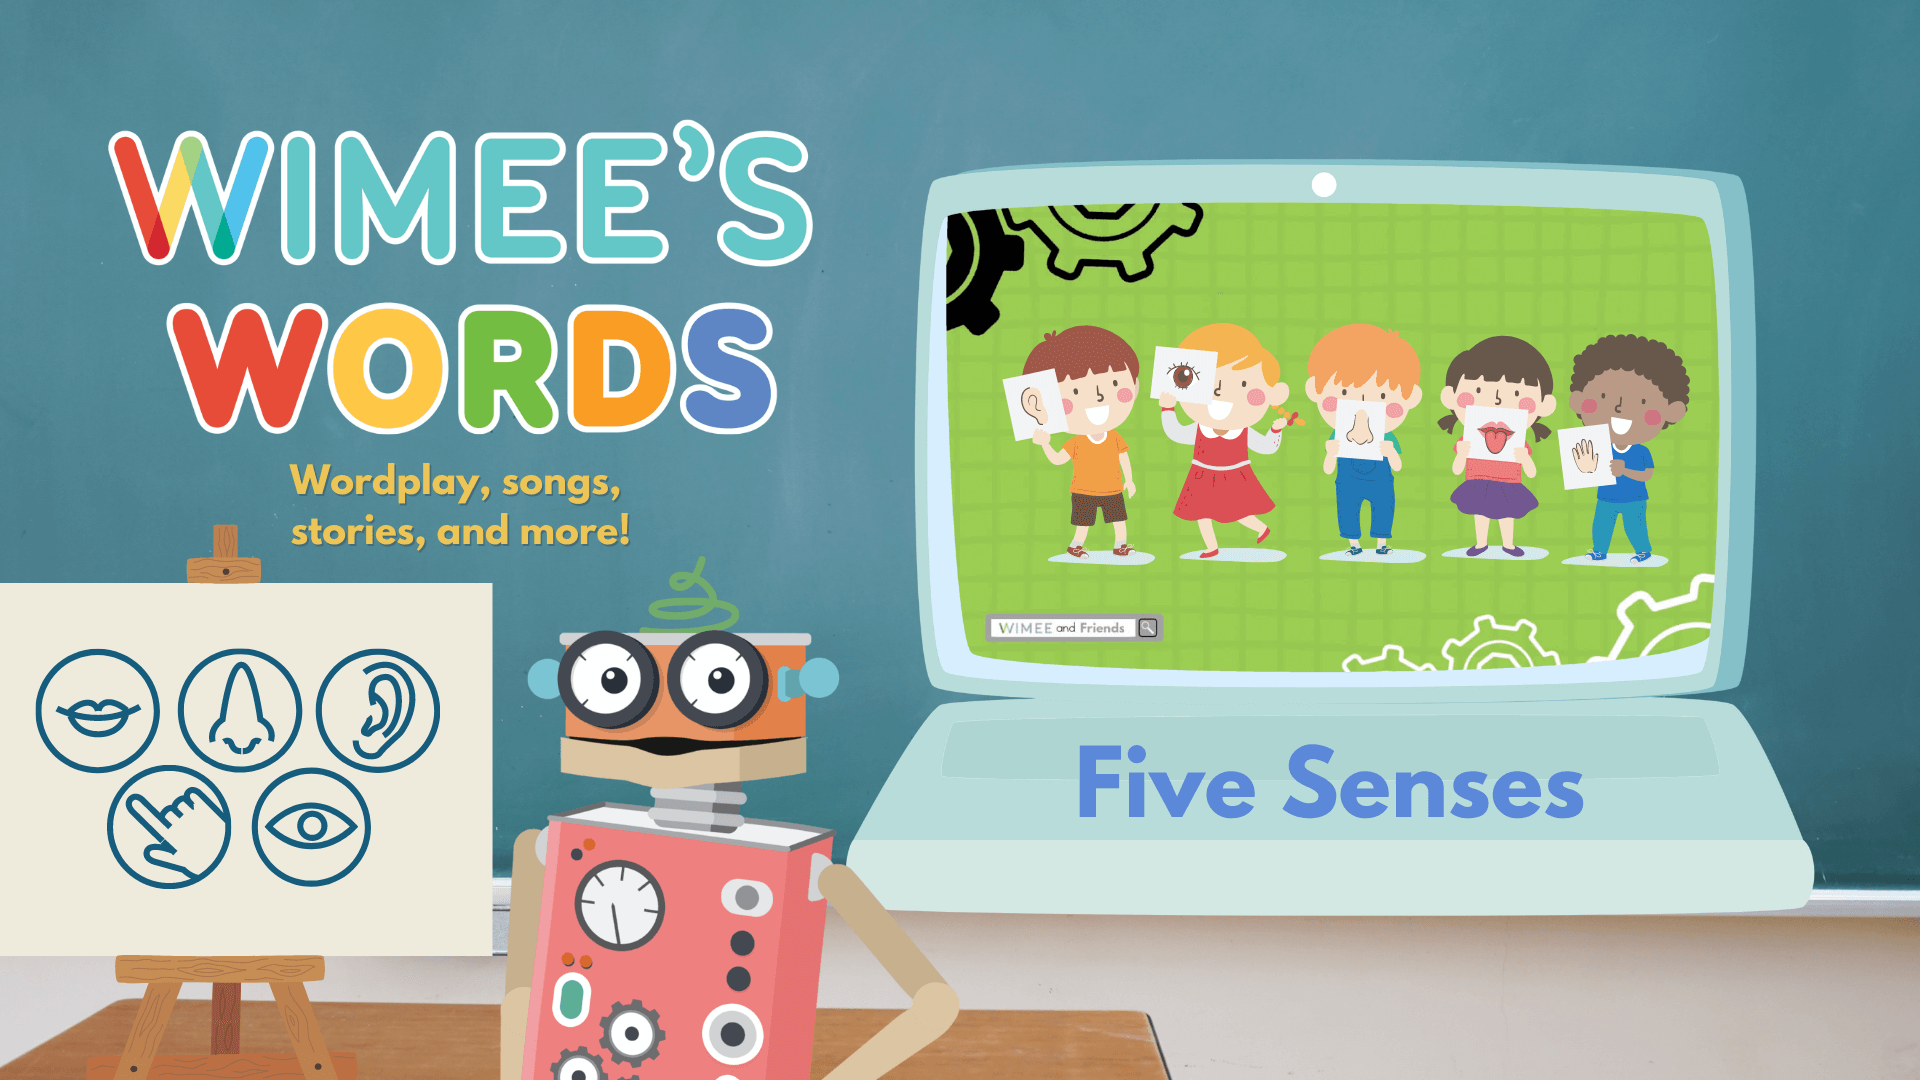 "Five Senses" Wimee's Words title card